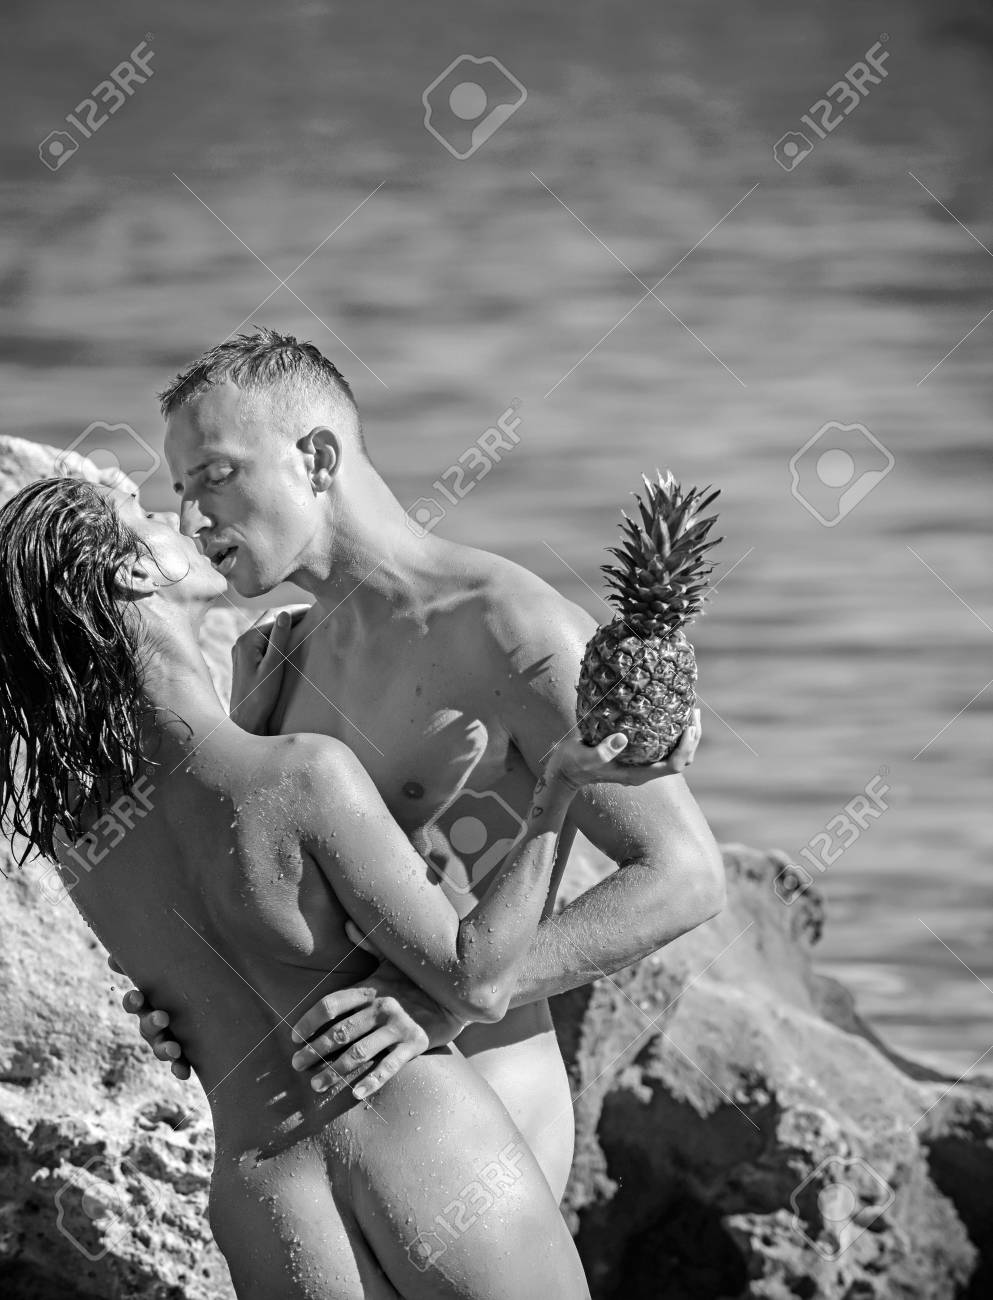 ayan moitra add photo naked beach couples pics